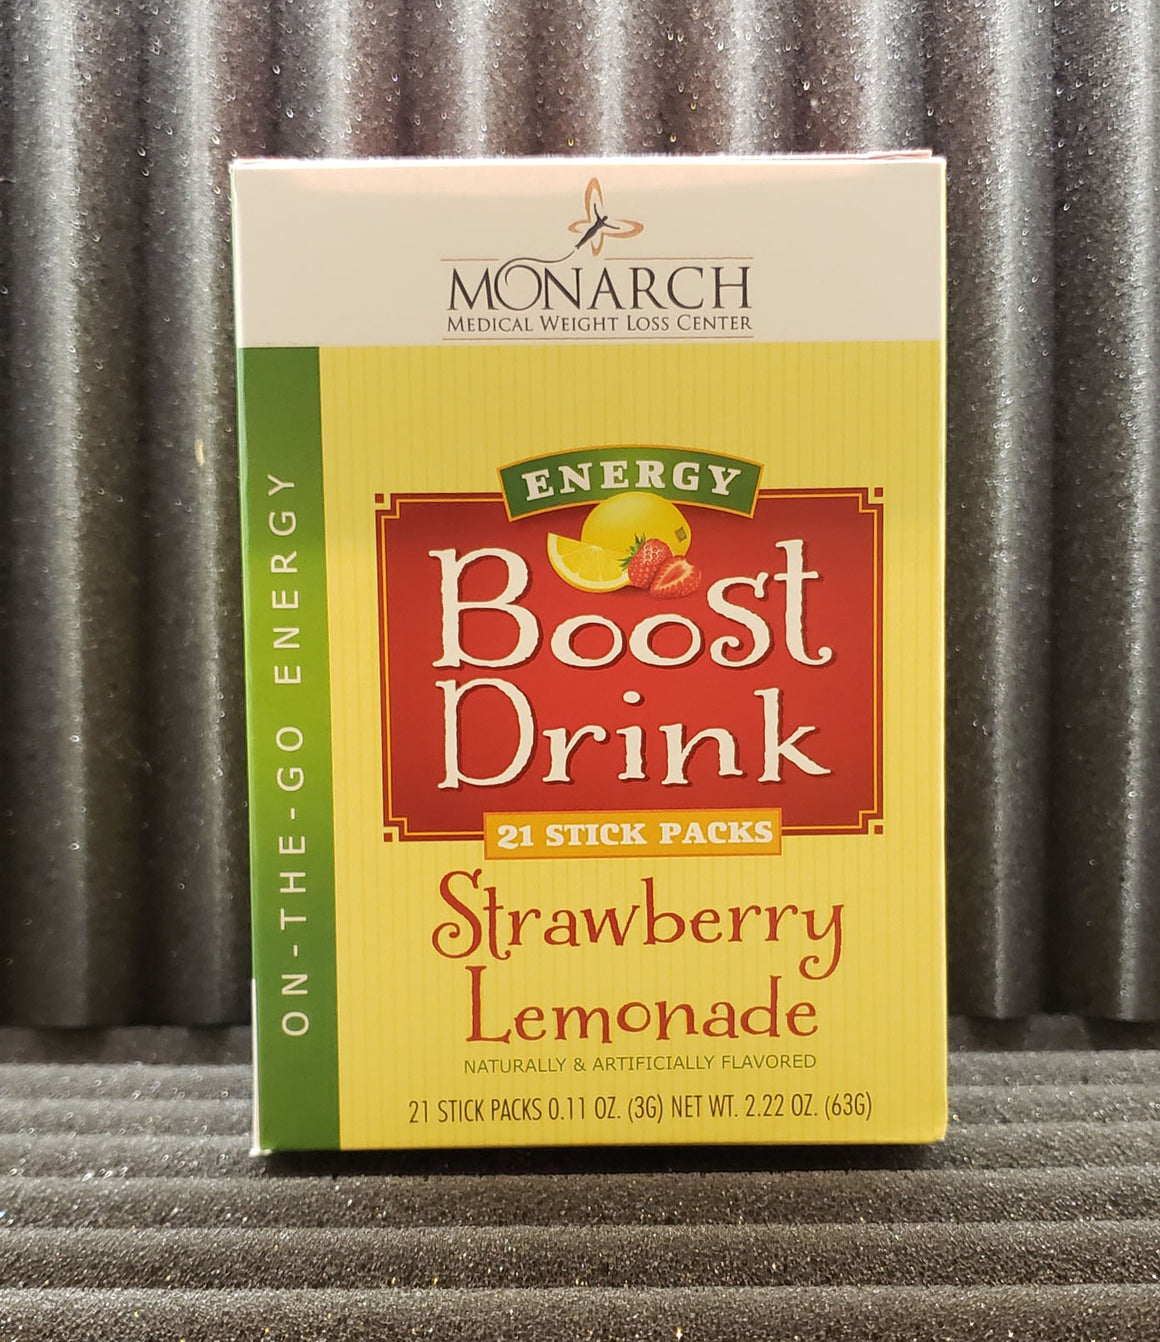 Strawberry Lemonade Energy Boost Drink